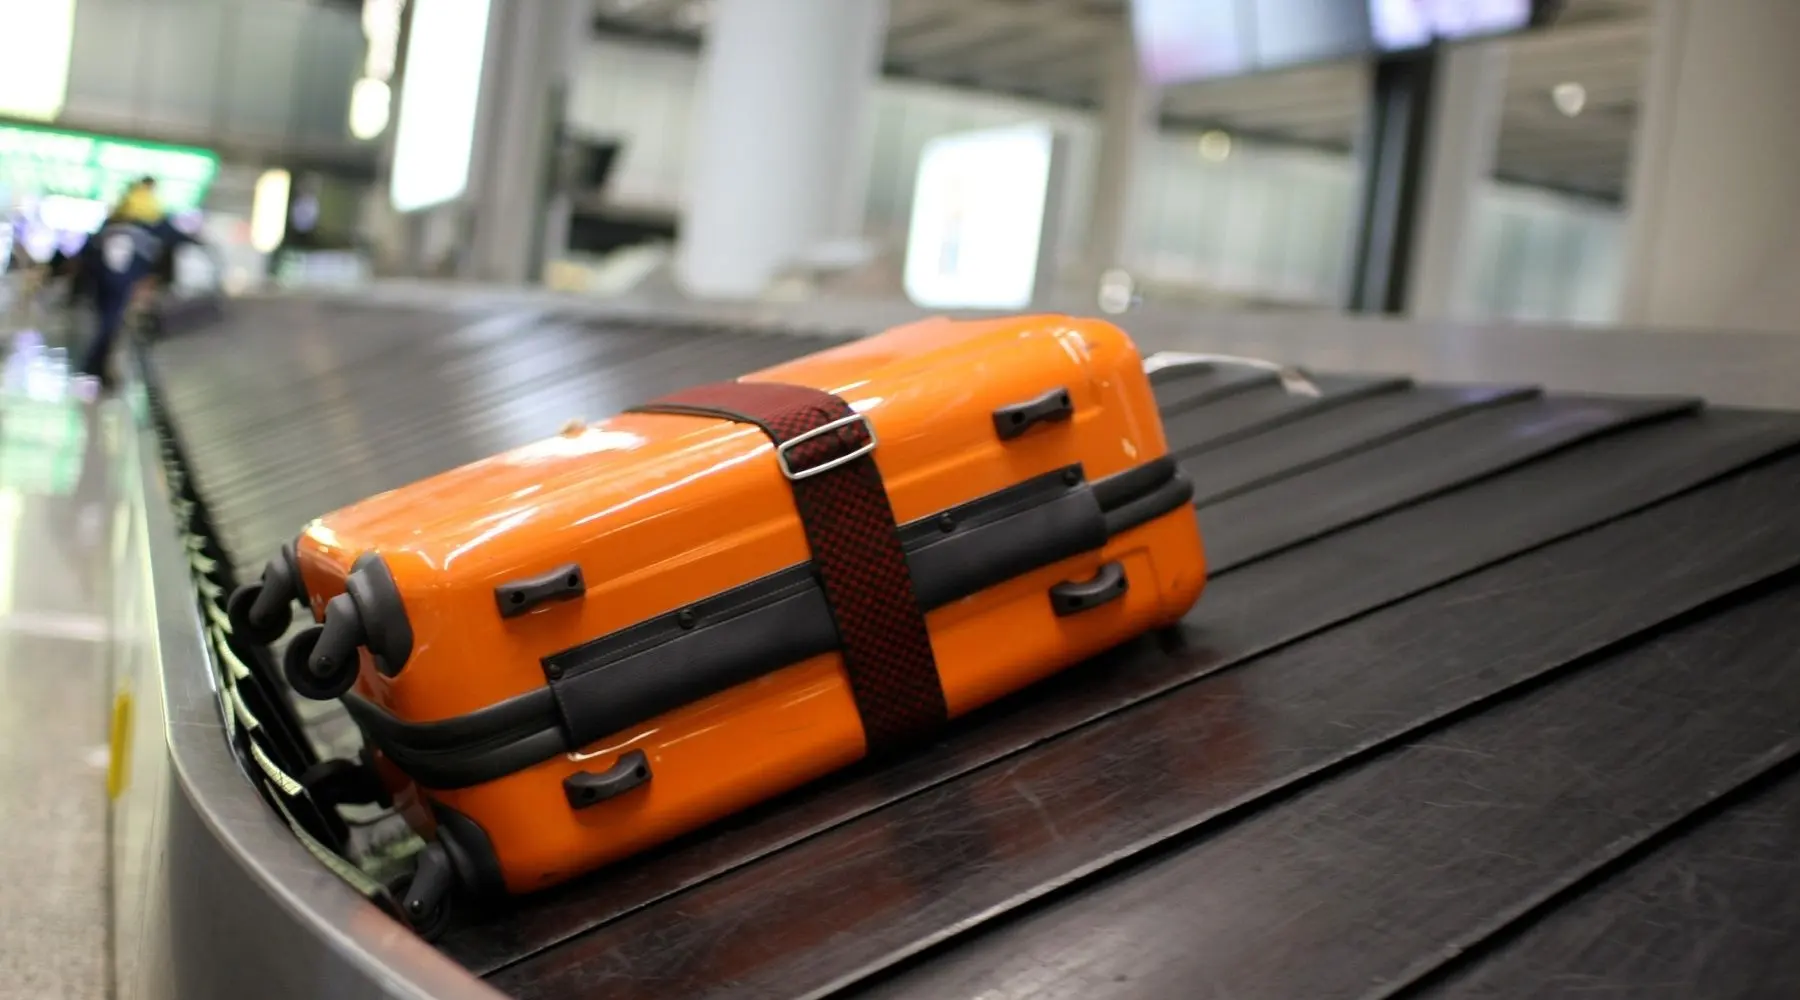 A lone orange suitcase on a luggage carousel